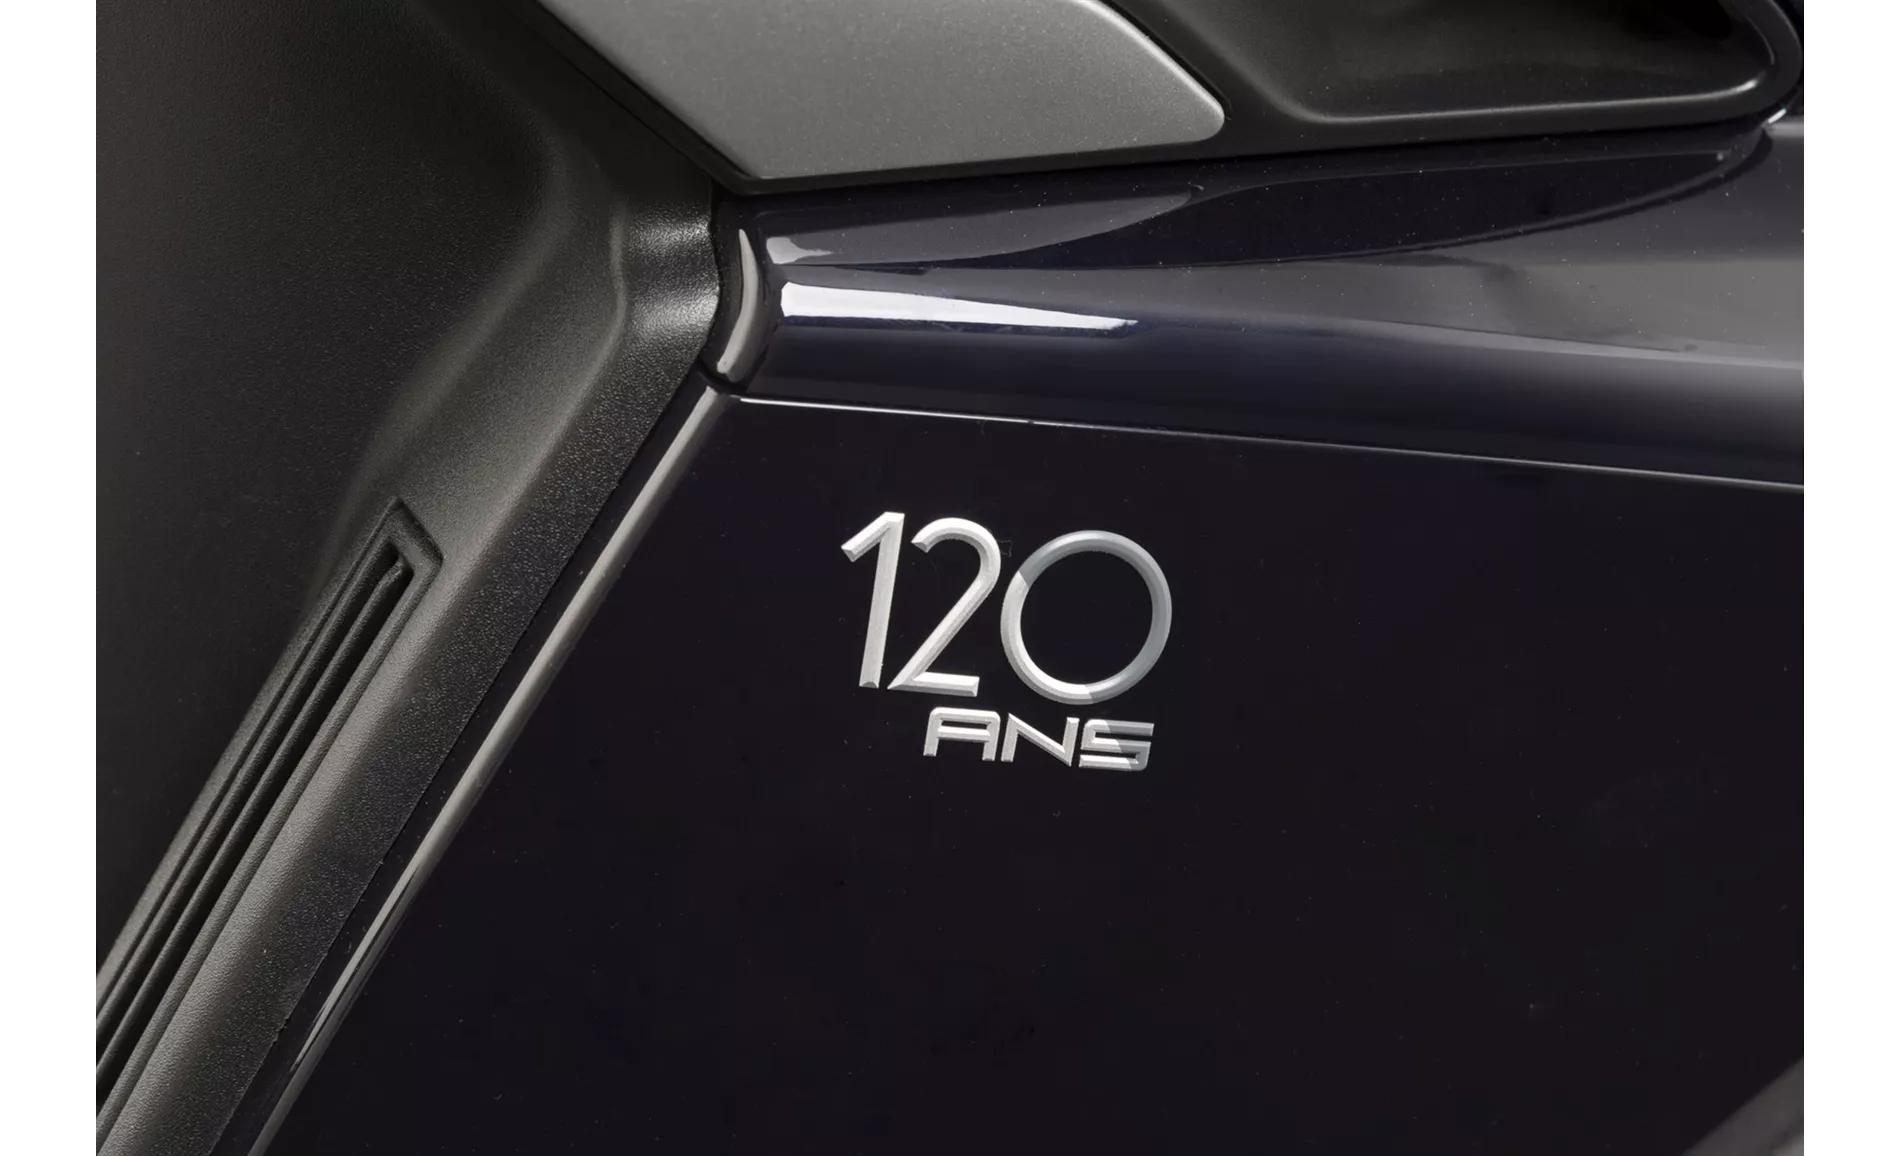 Peugeot Metropolis 120 ans 2019